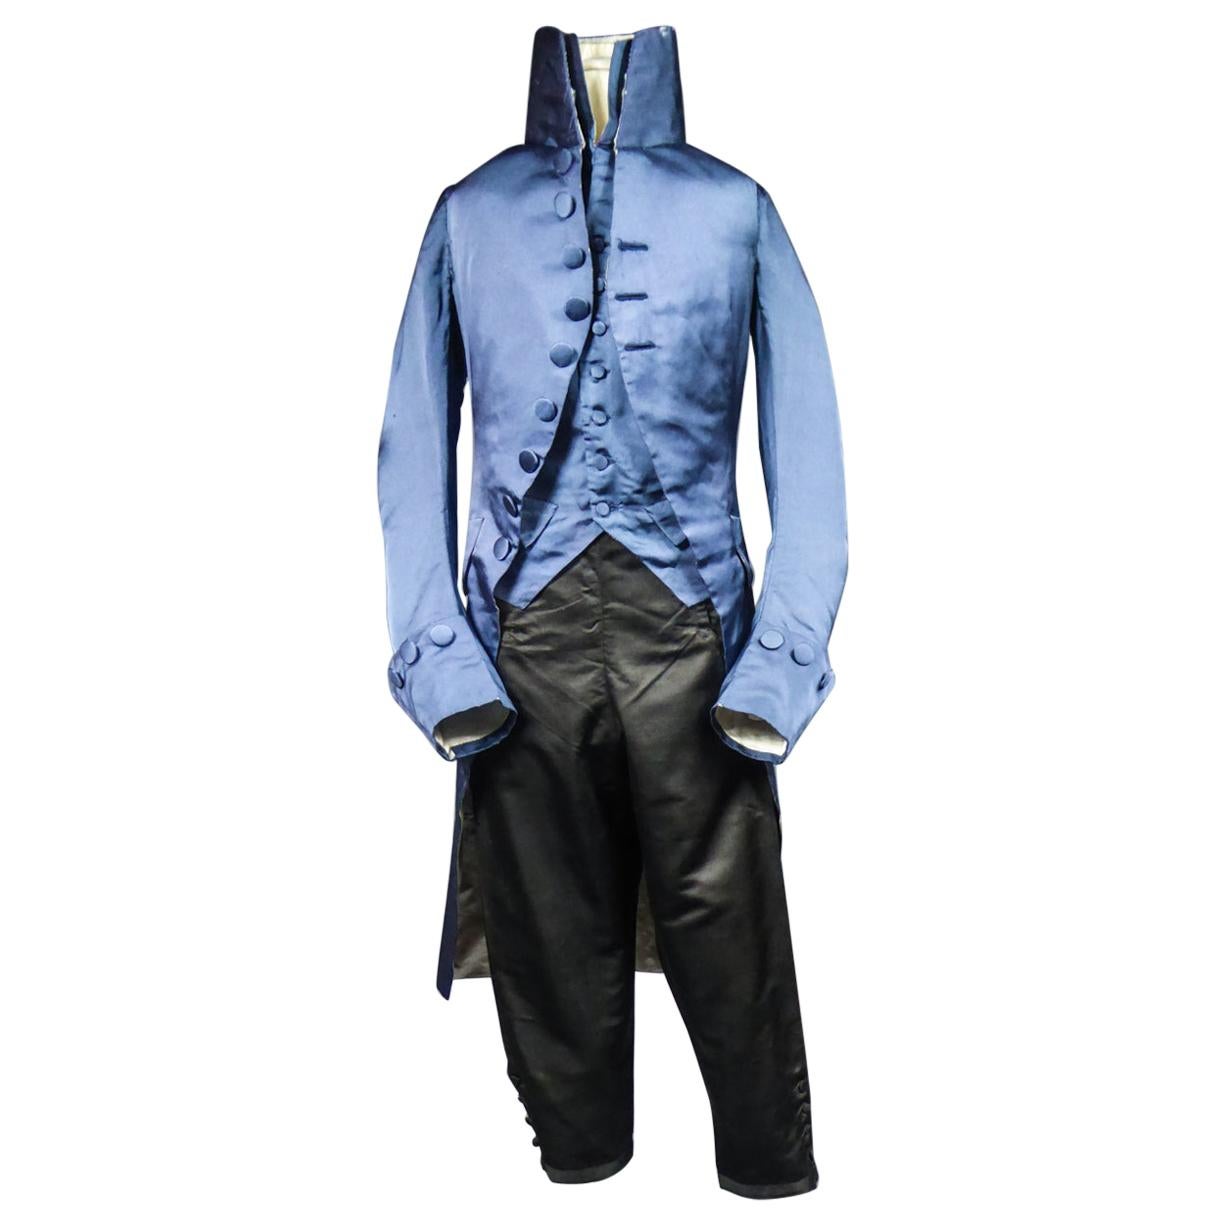  A French Blue Silk Habit de Ville Complete Frock Coat - Napoleonic Period 1805